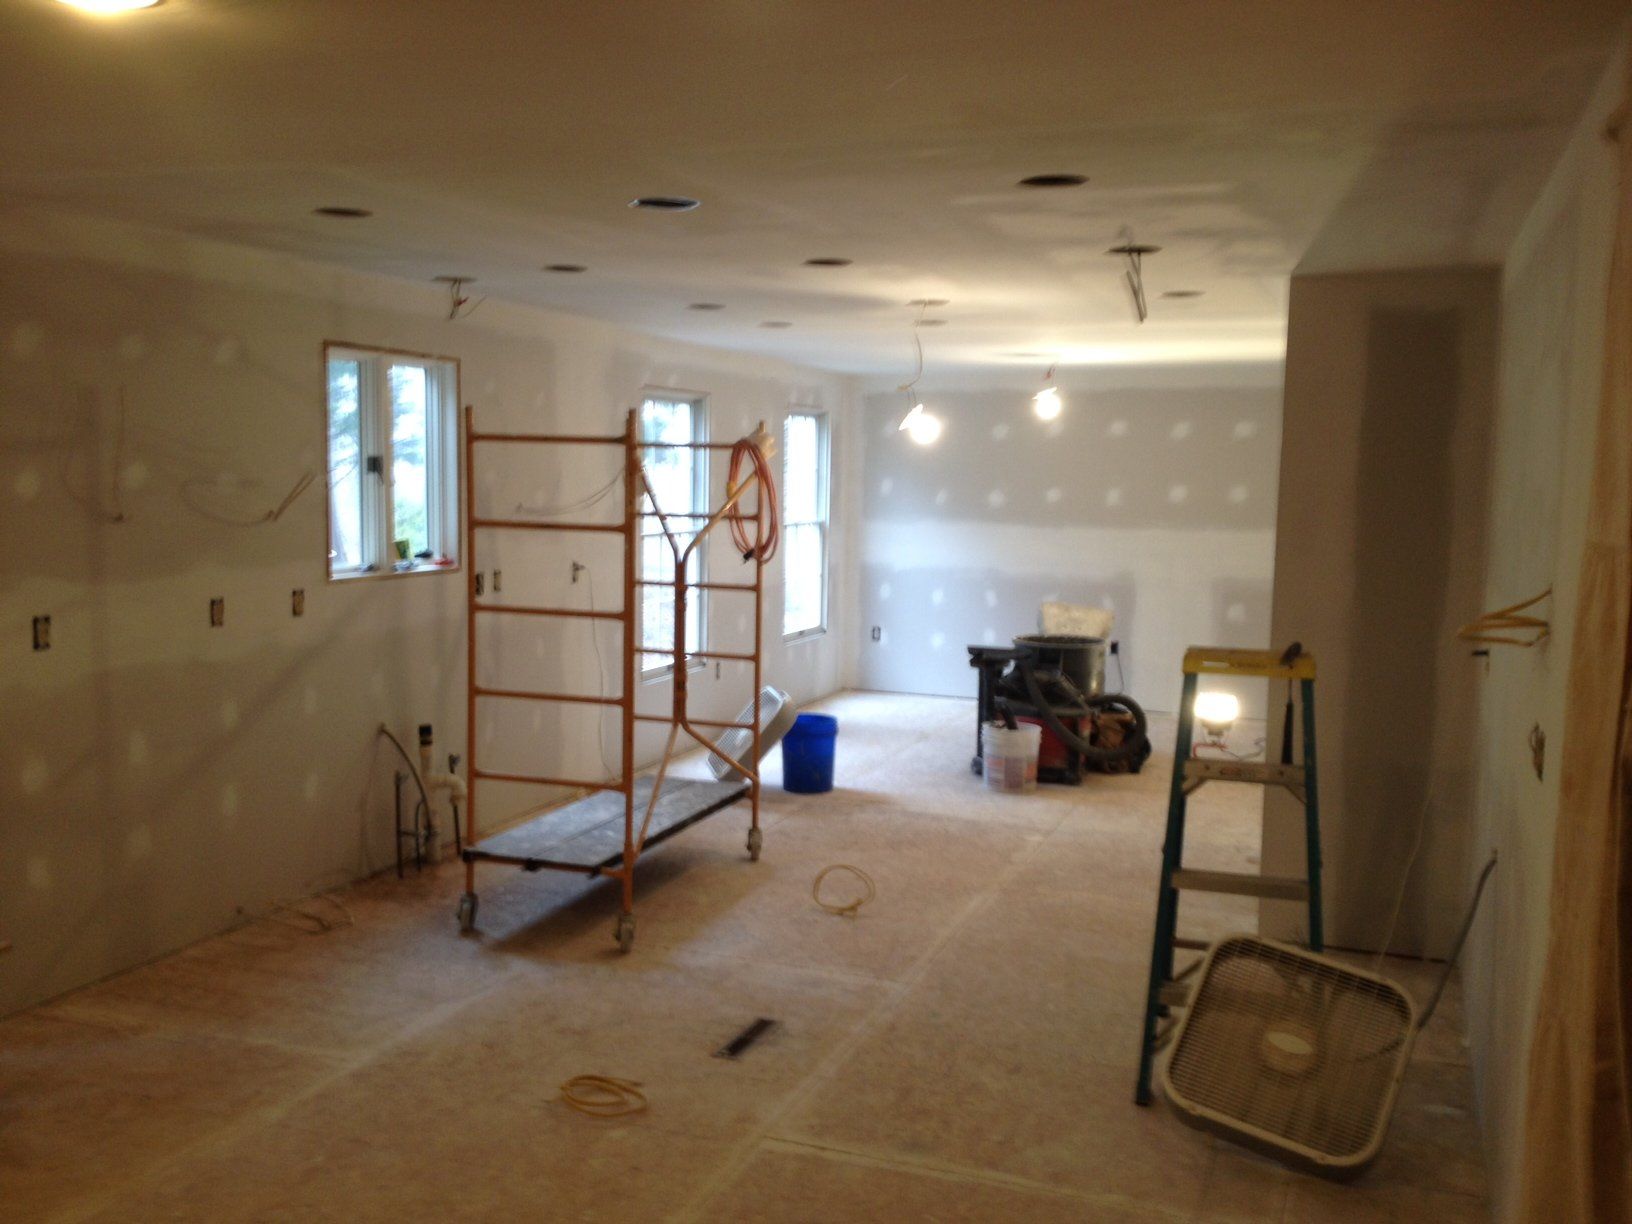 Kitchen Construction - Home Improvement Services in Glen Arm, MD